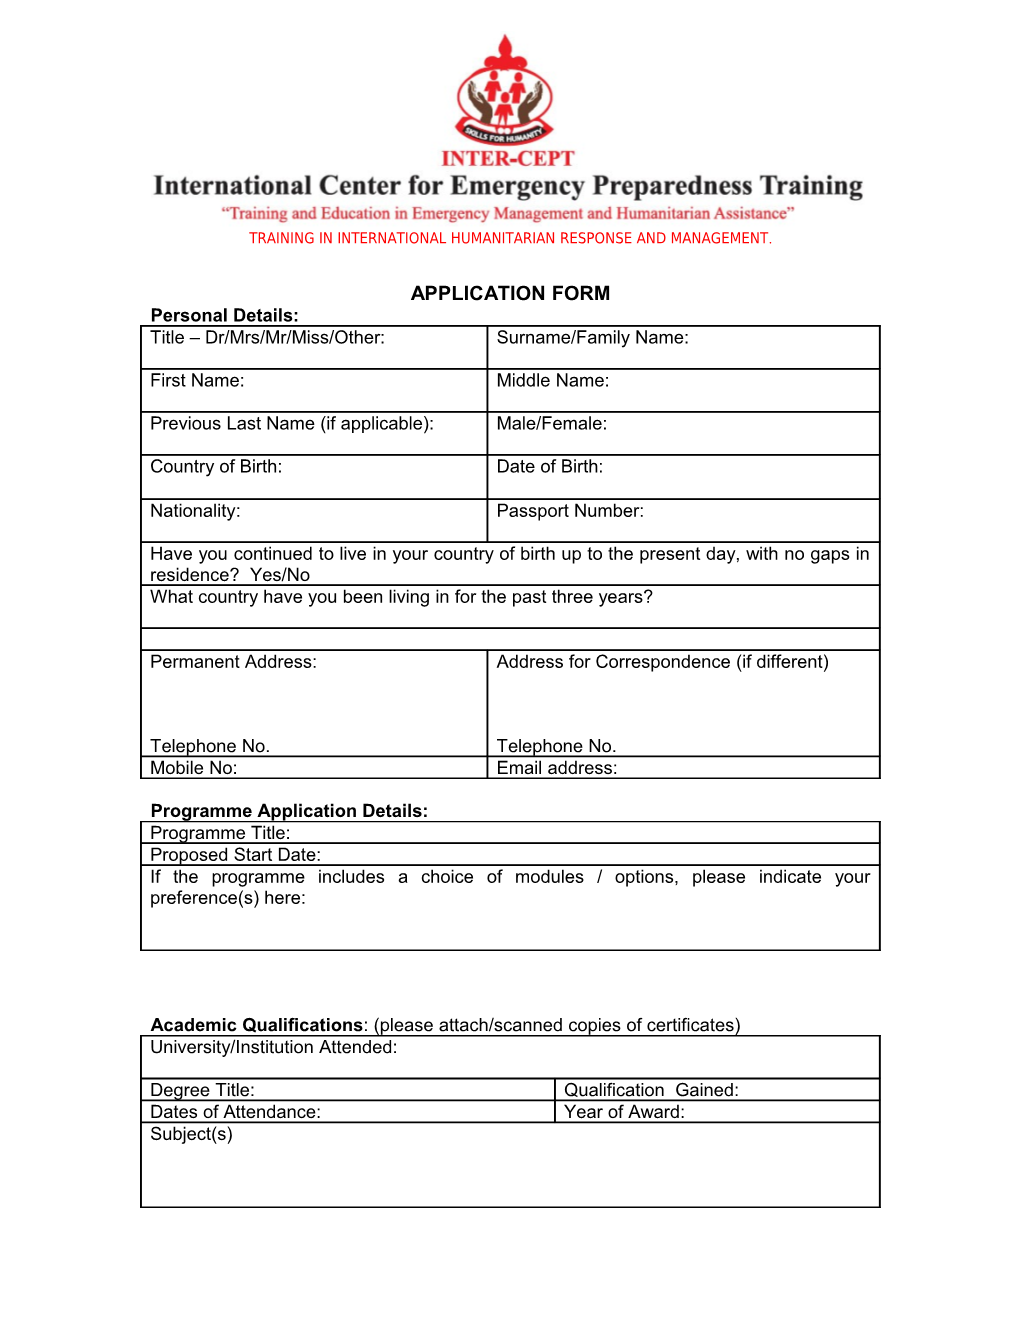 Training in International Humanitarian Response and Management